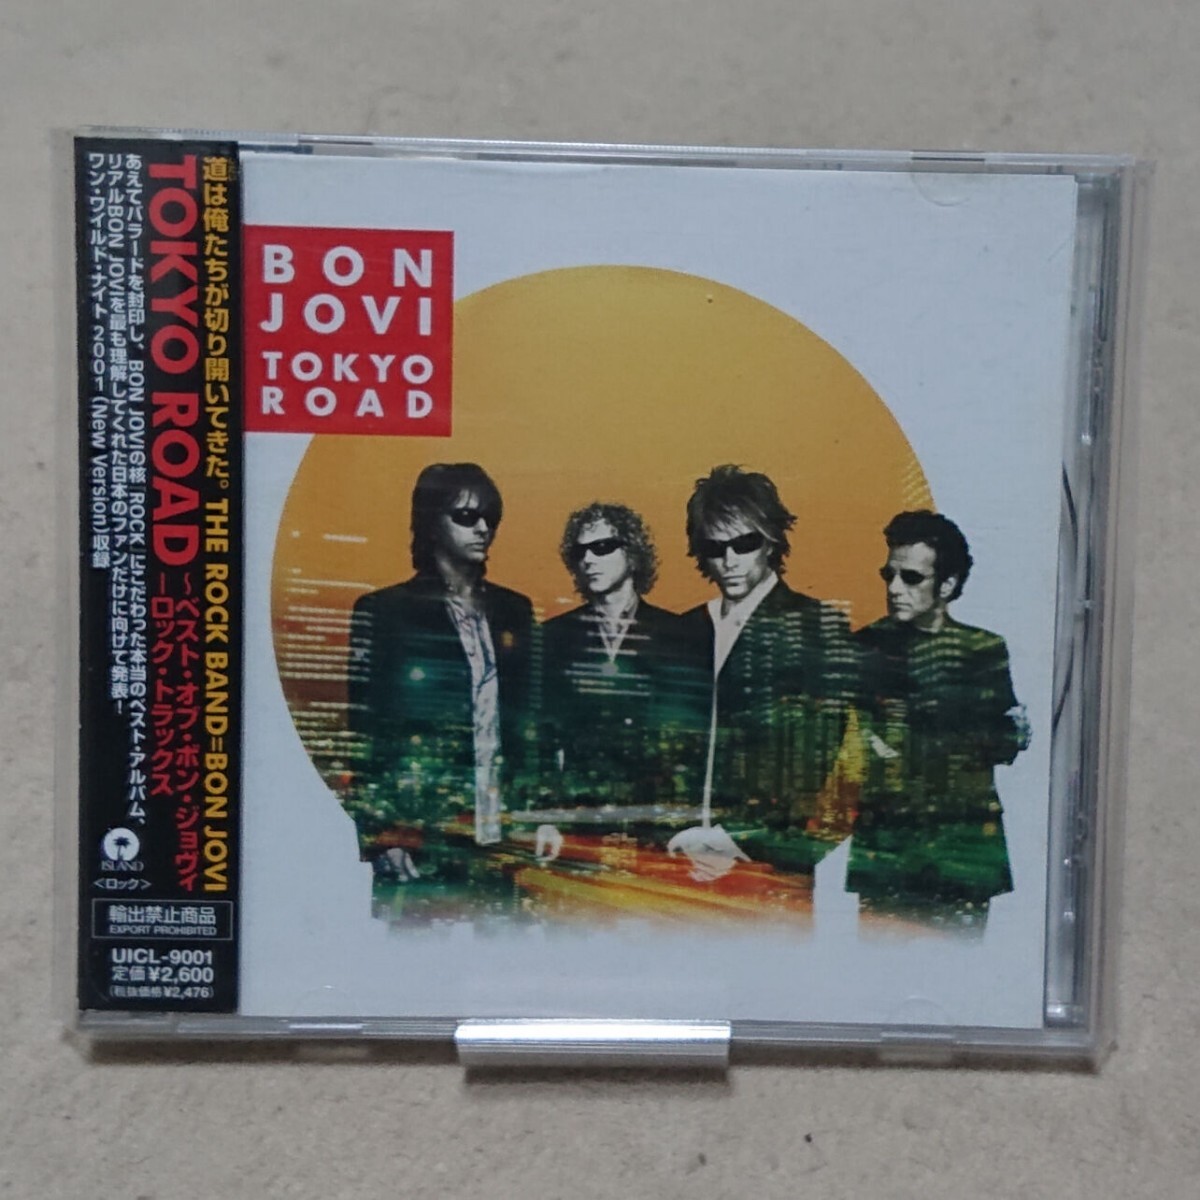 【CD】ボン・ジョヴィ/ベスト・ロック・トラックス Bon Jovi/Tokyo Road《国内盤》8cmCD付き_画像1